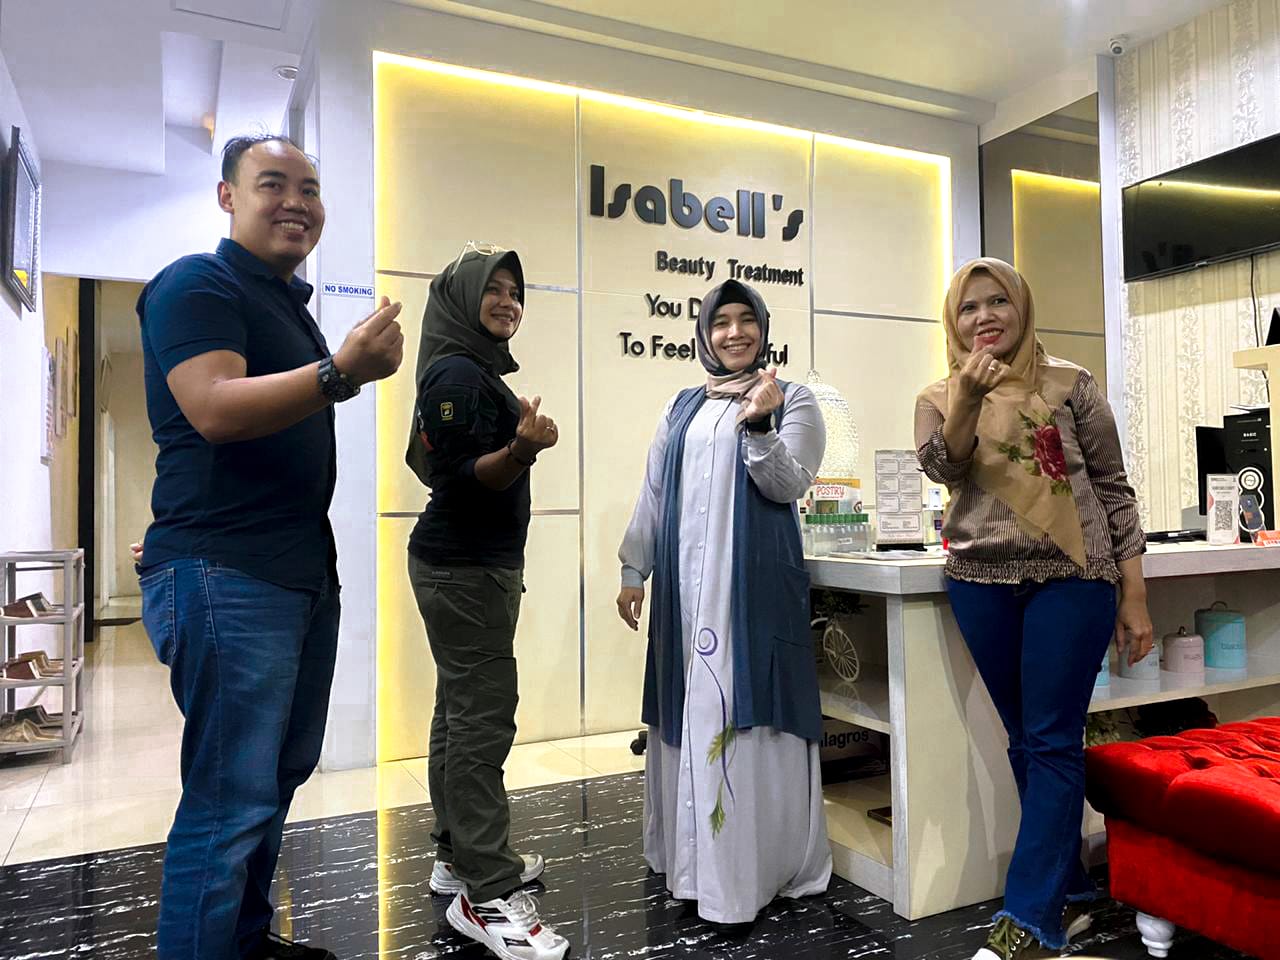 F3 Agency Media Partner Bermitra dengan Isabell's Beauty Treatment